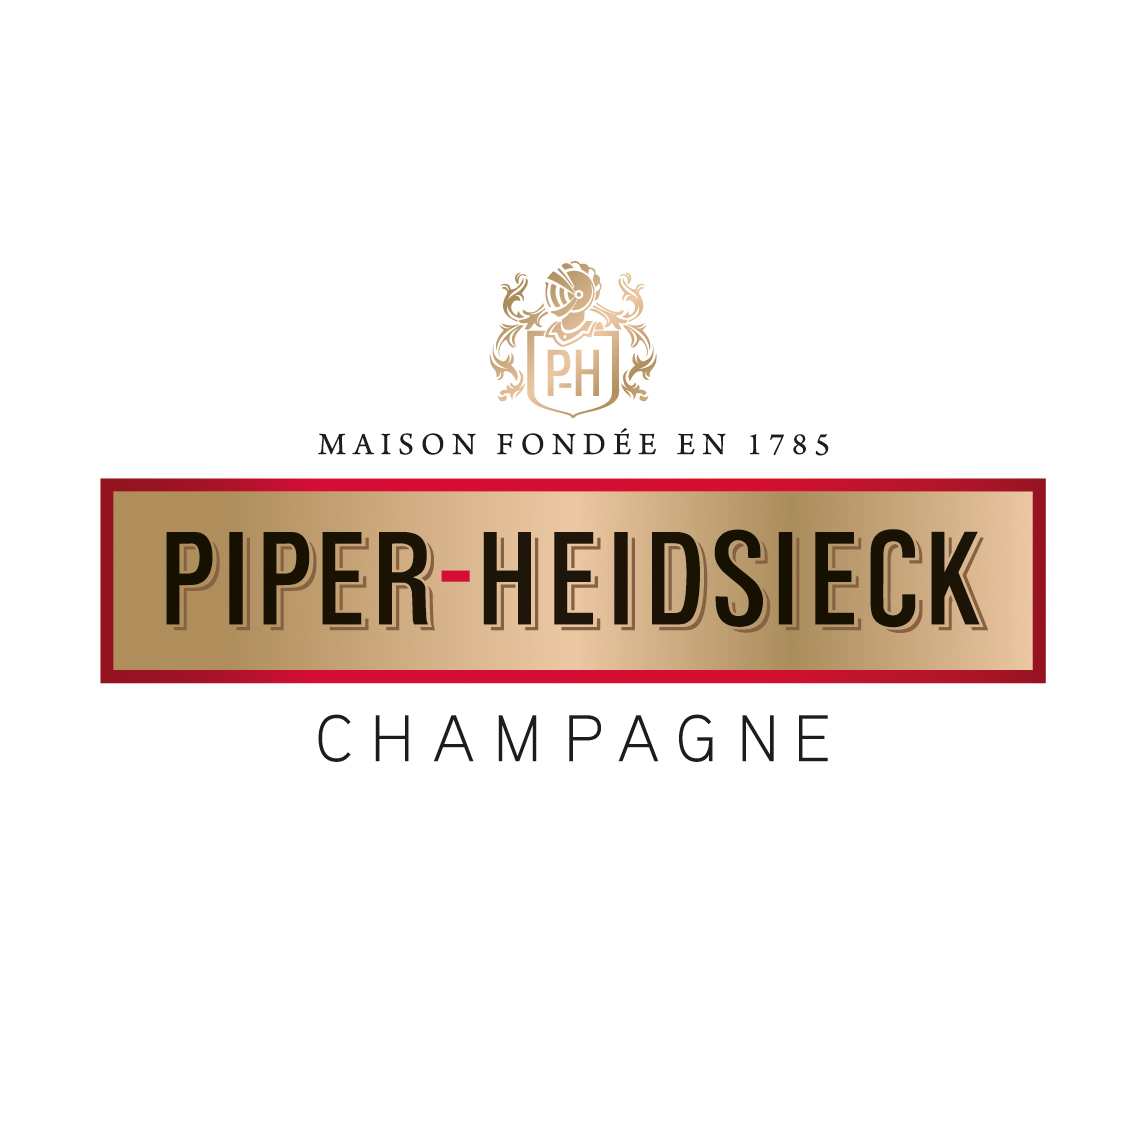 PIper-Heidsieck Logo